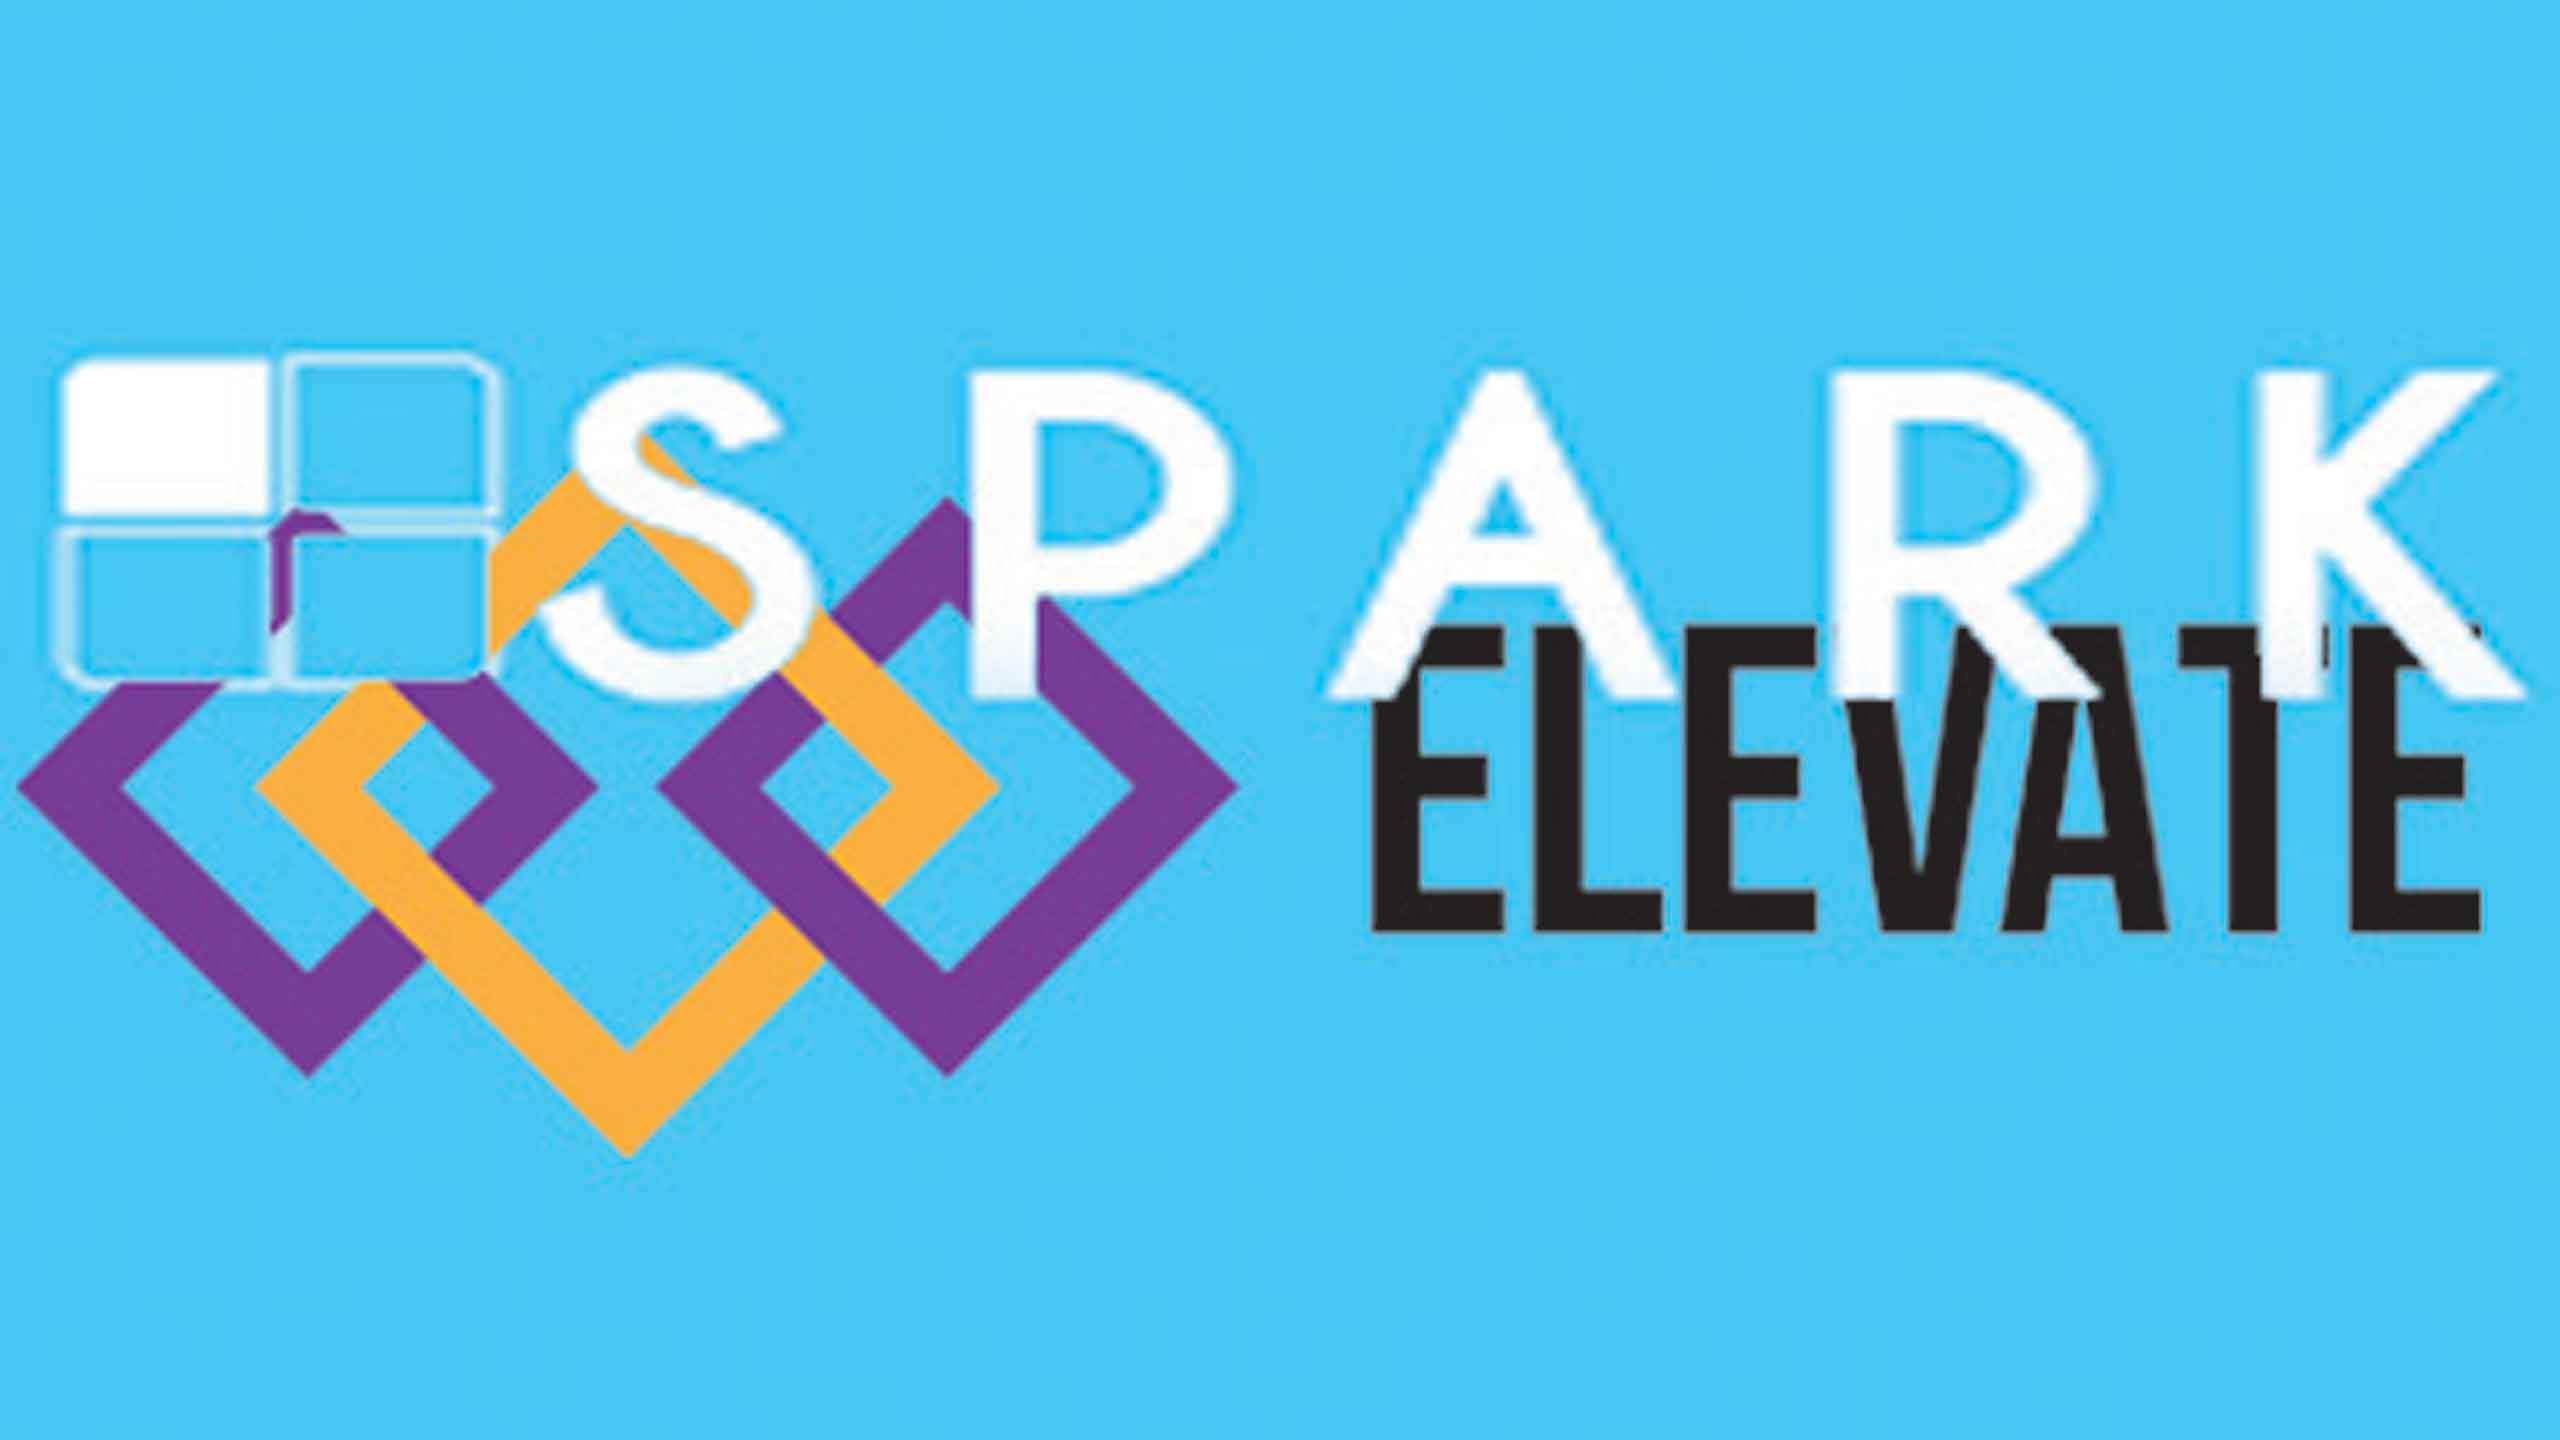 The Spark and Elevate logos. ILLUSTRATION Devin Jones